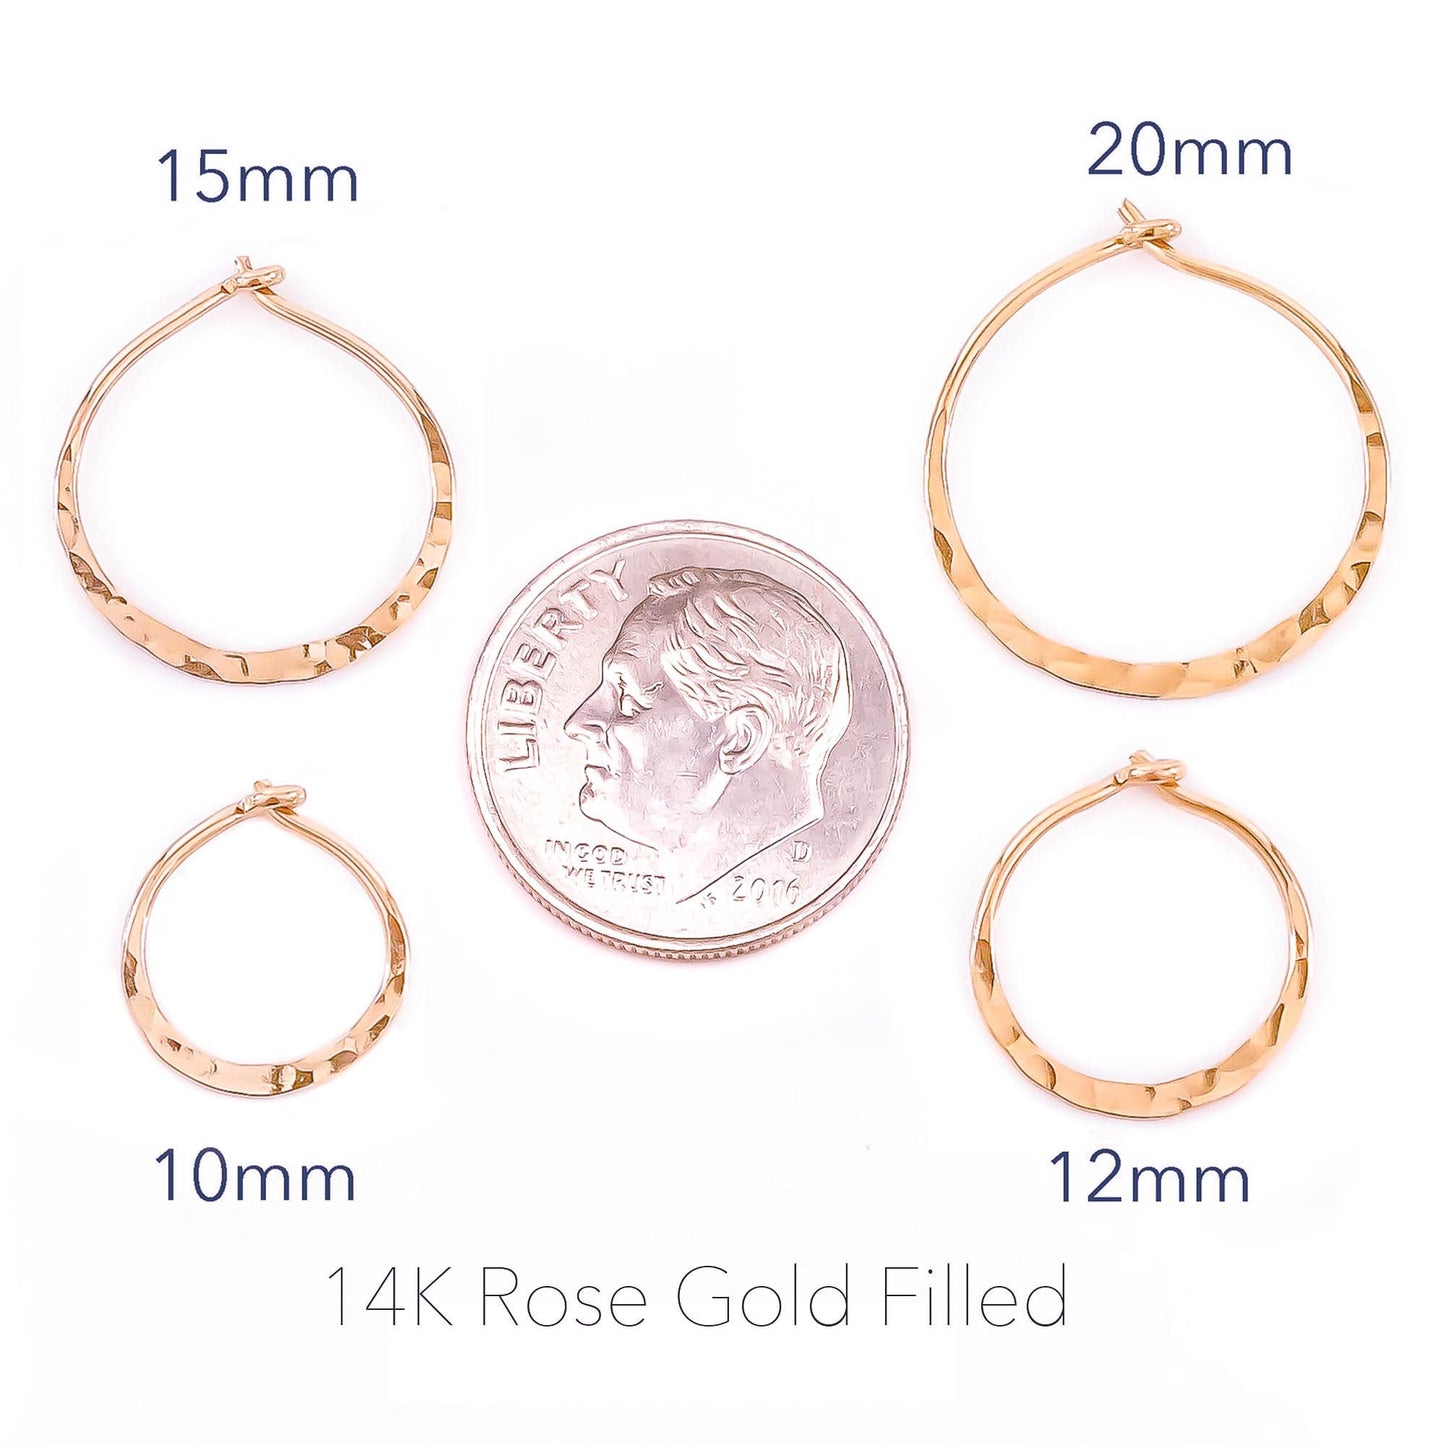 12mm Hammered Hoop Earrings, 14K Rose Gold Filled